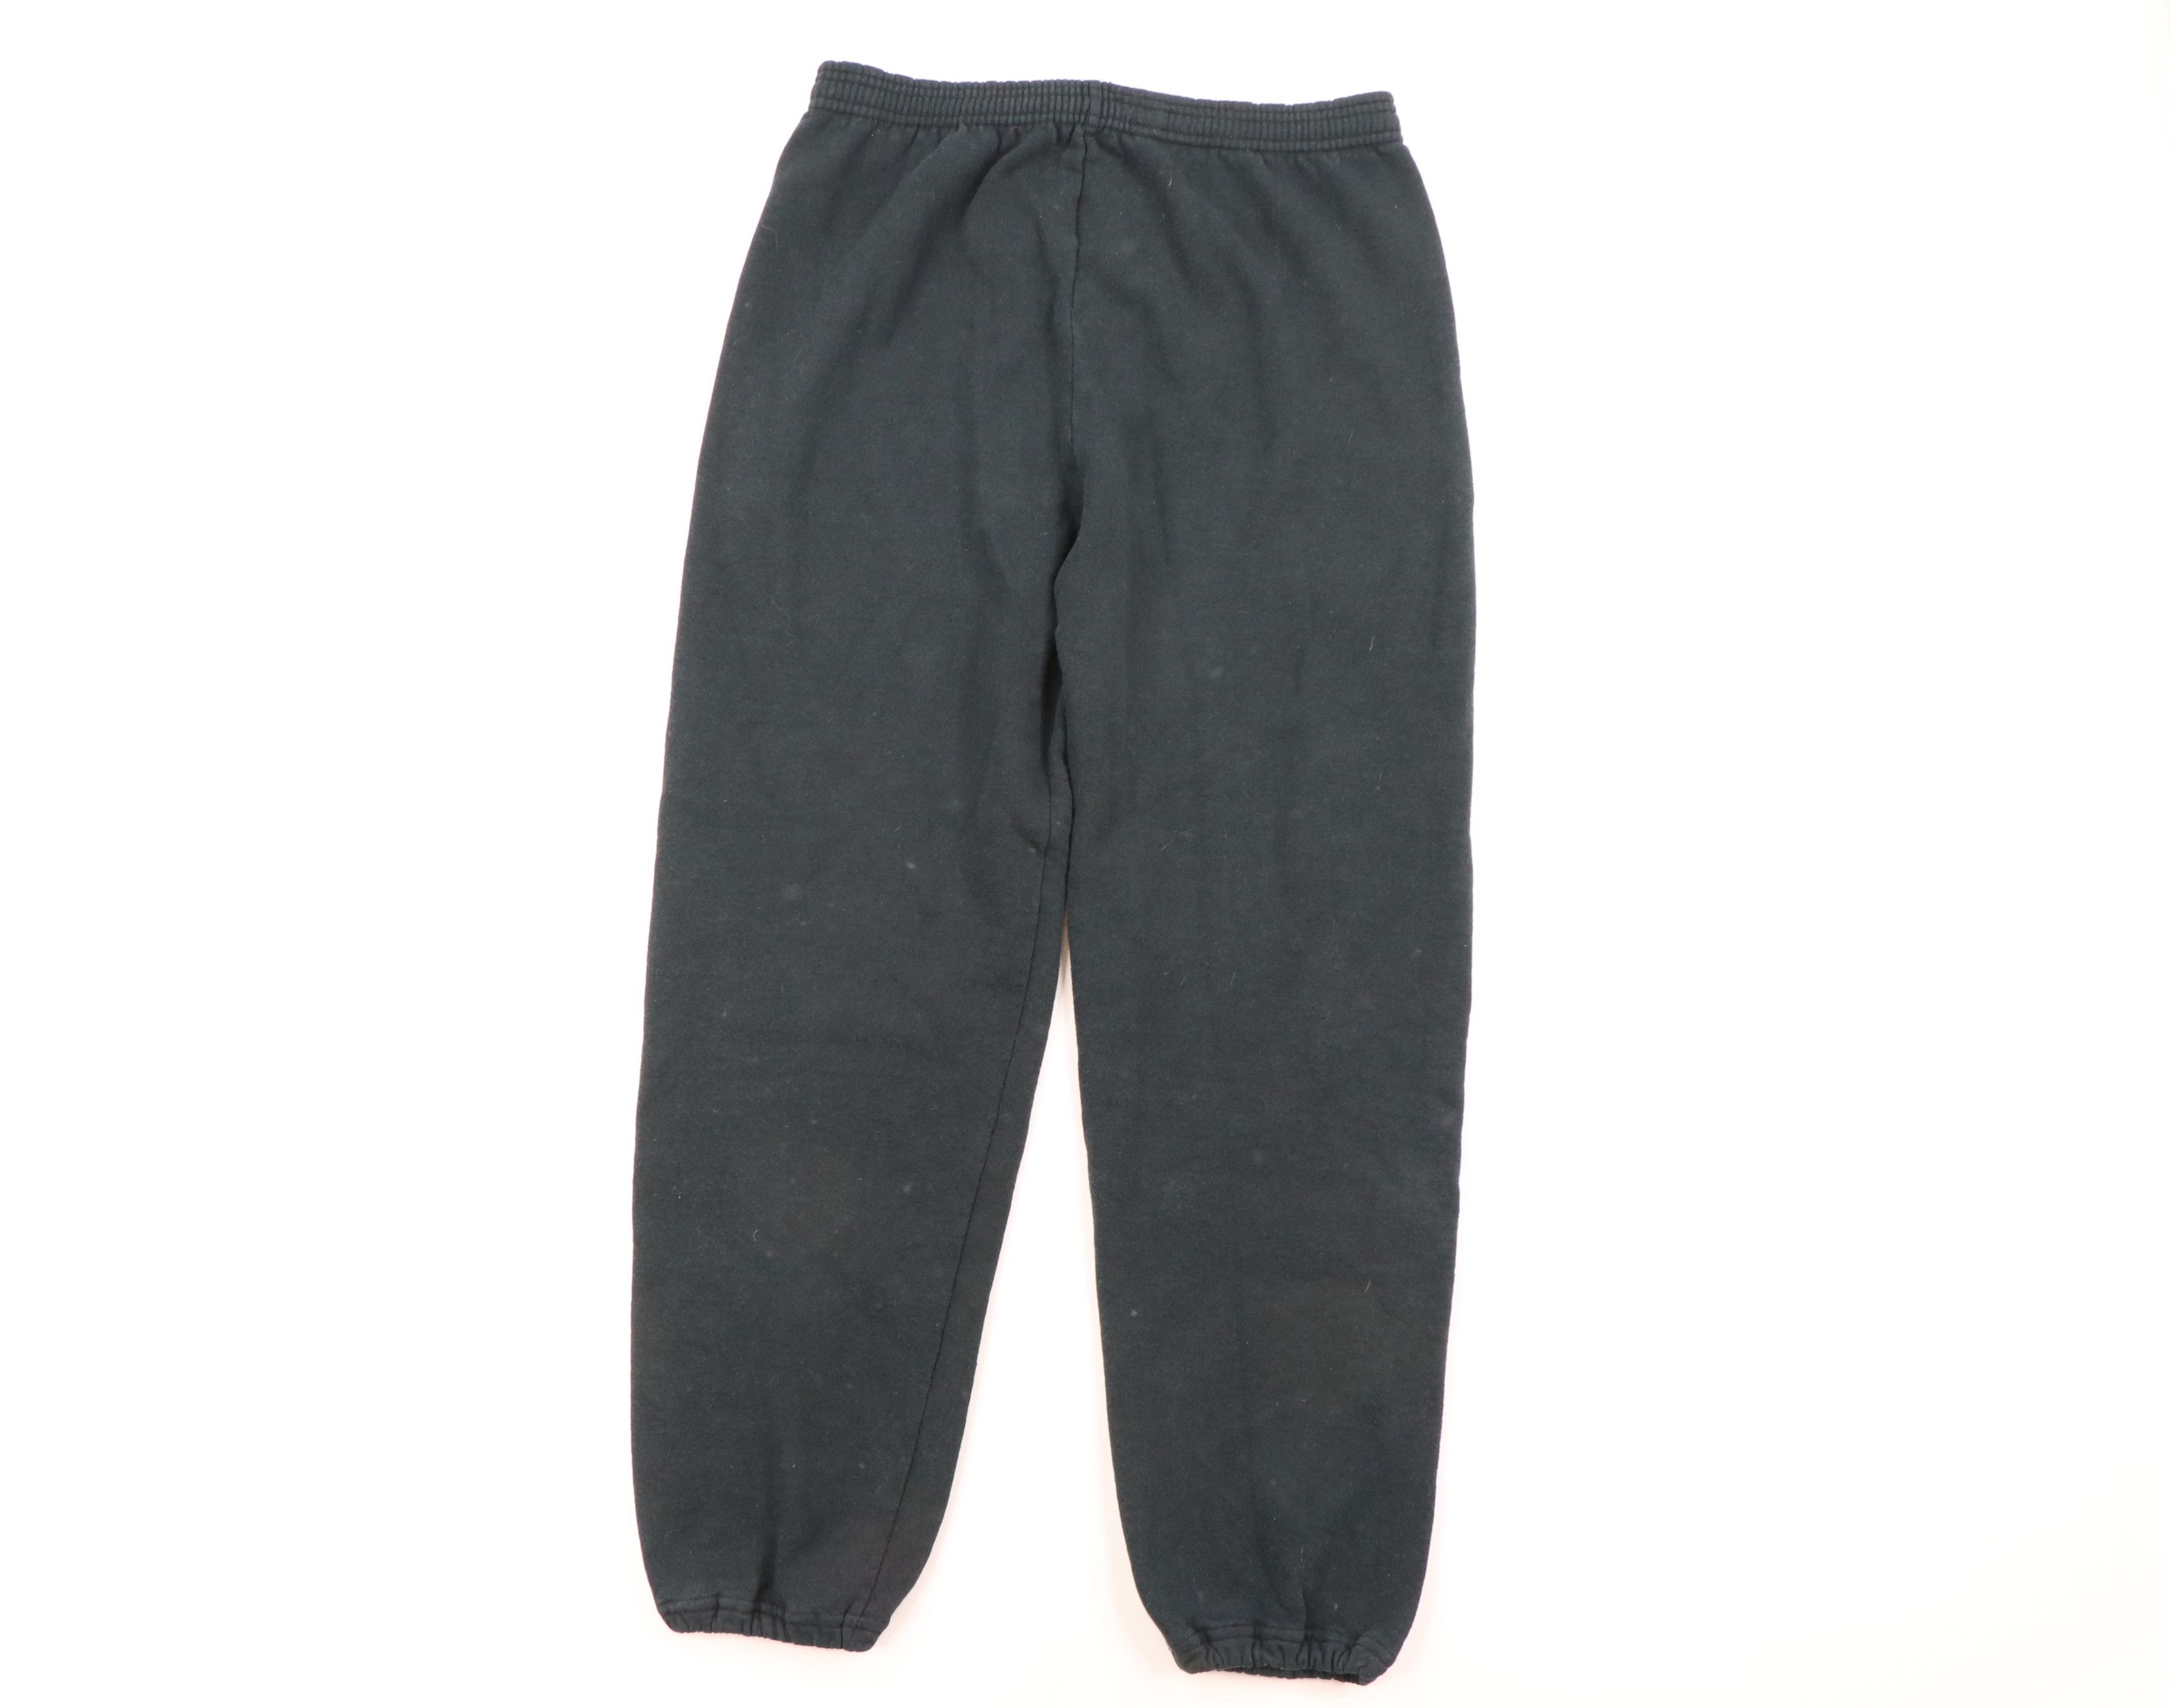 Vintage Vintage 90s Streetwear Faded Blank Sweatpants Joggers Pants Size US 36 / EU 52 - 5 Thumbnail